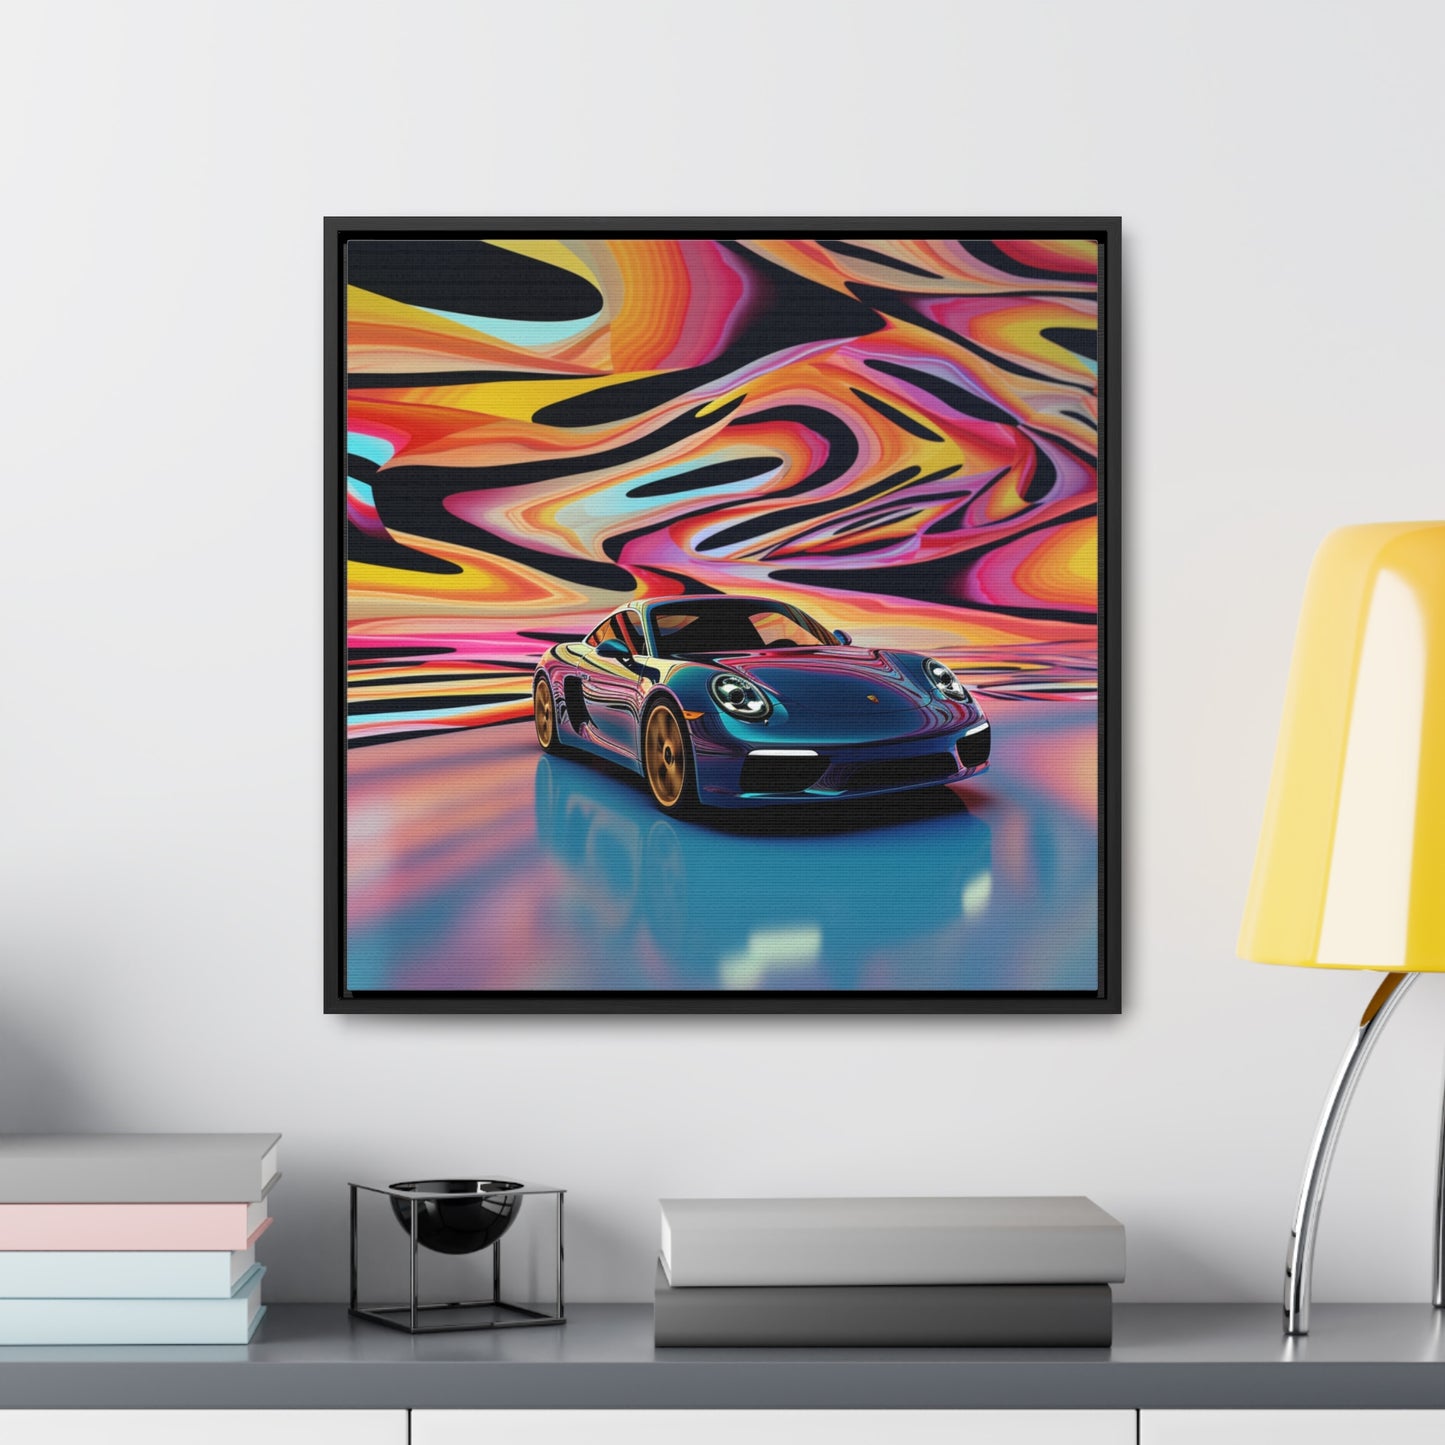 Gallery Canvas Wraps, Square Frame Porsche Water Fusion 2